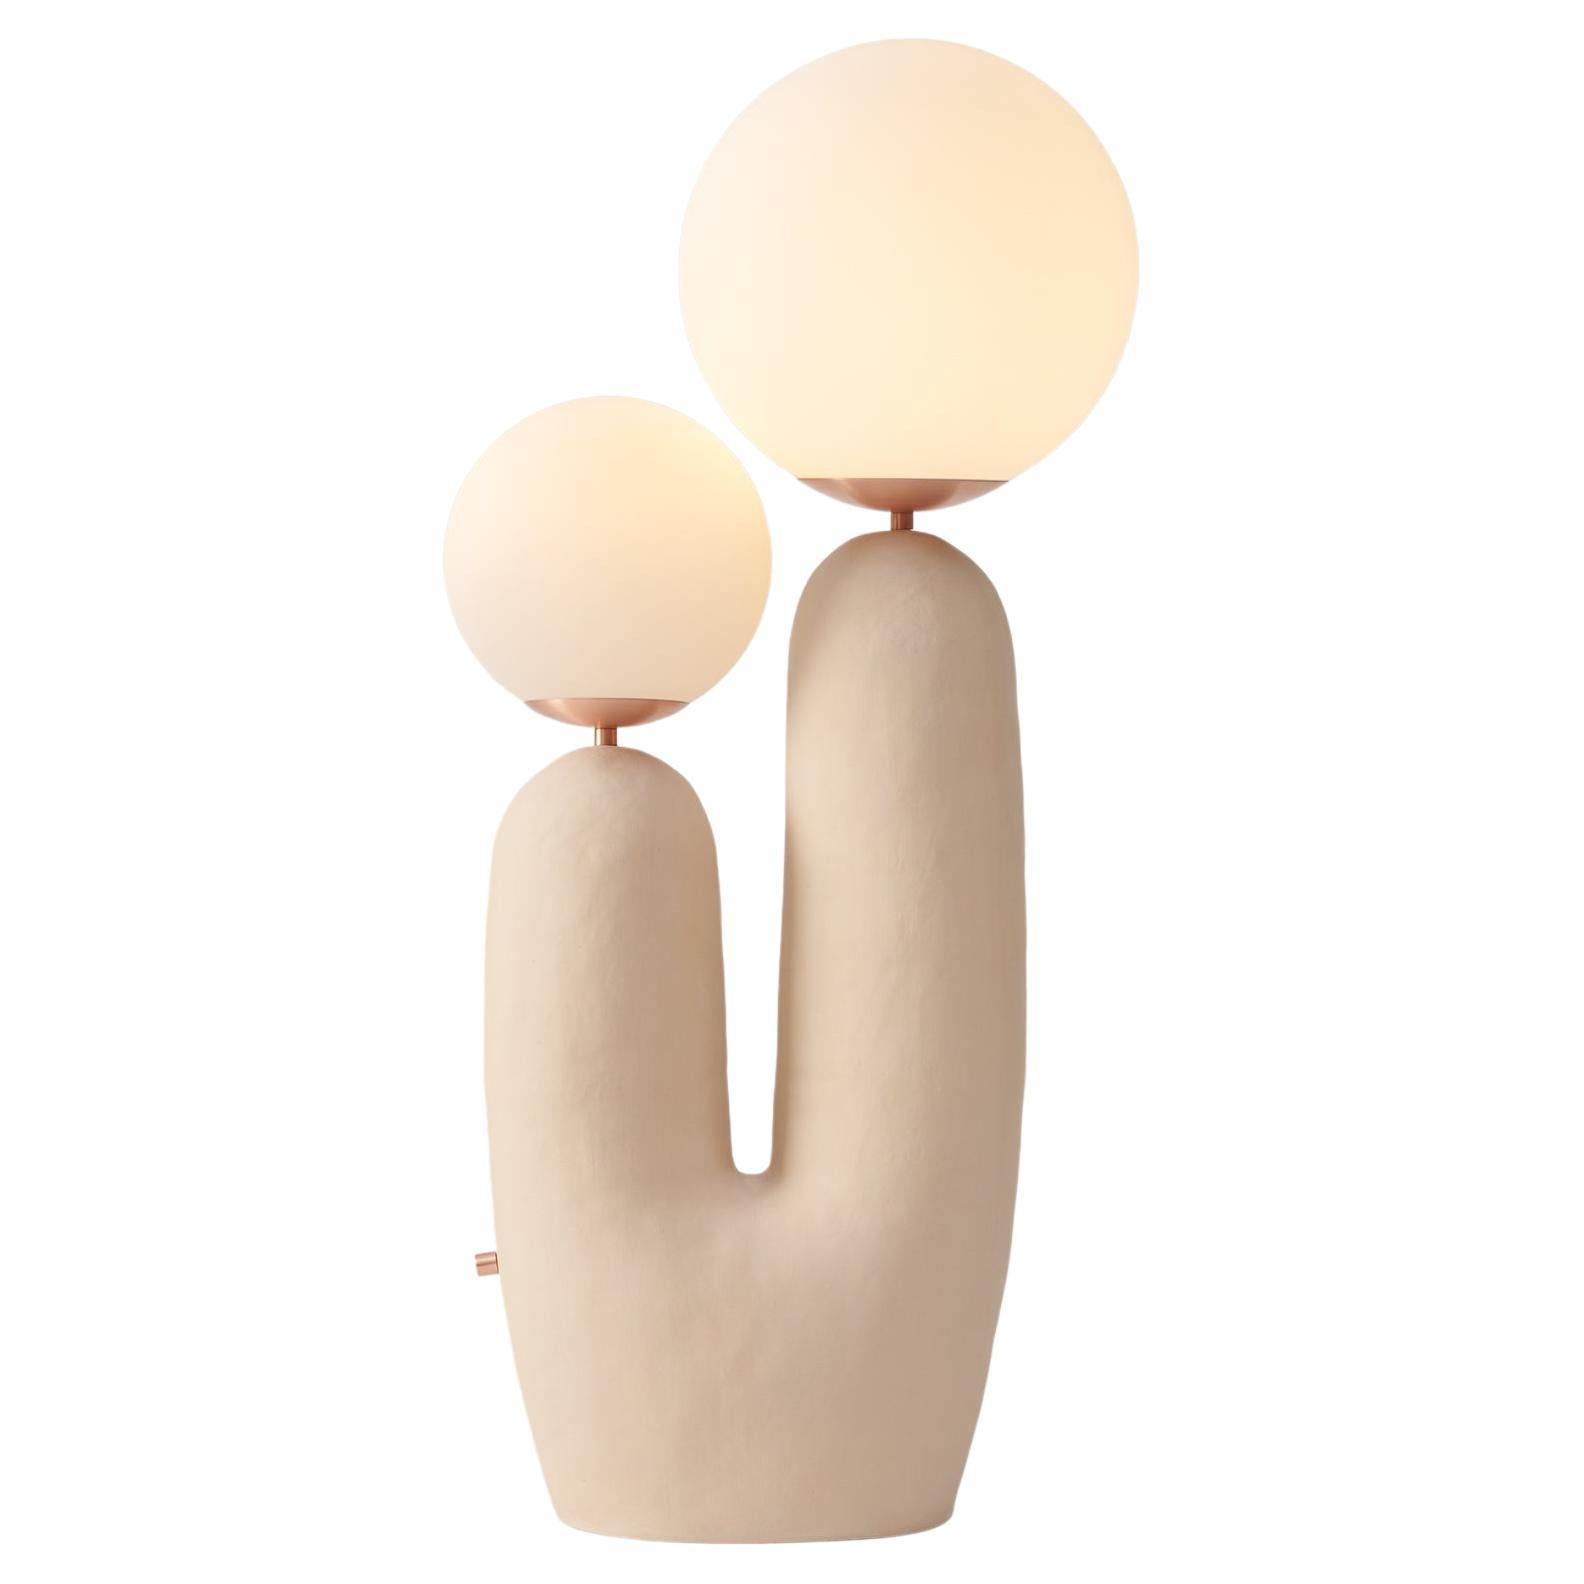 Contemporary Hand-built Ceramic Base Oo Lamp - Skin Tone #1, Medium